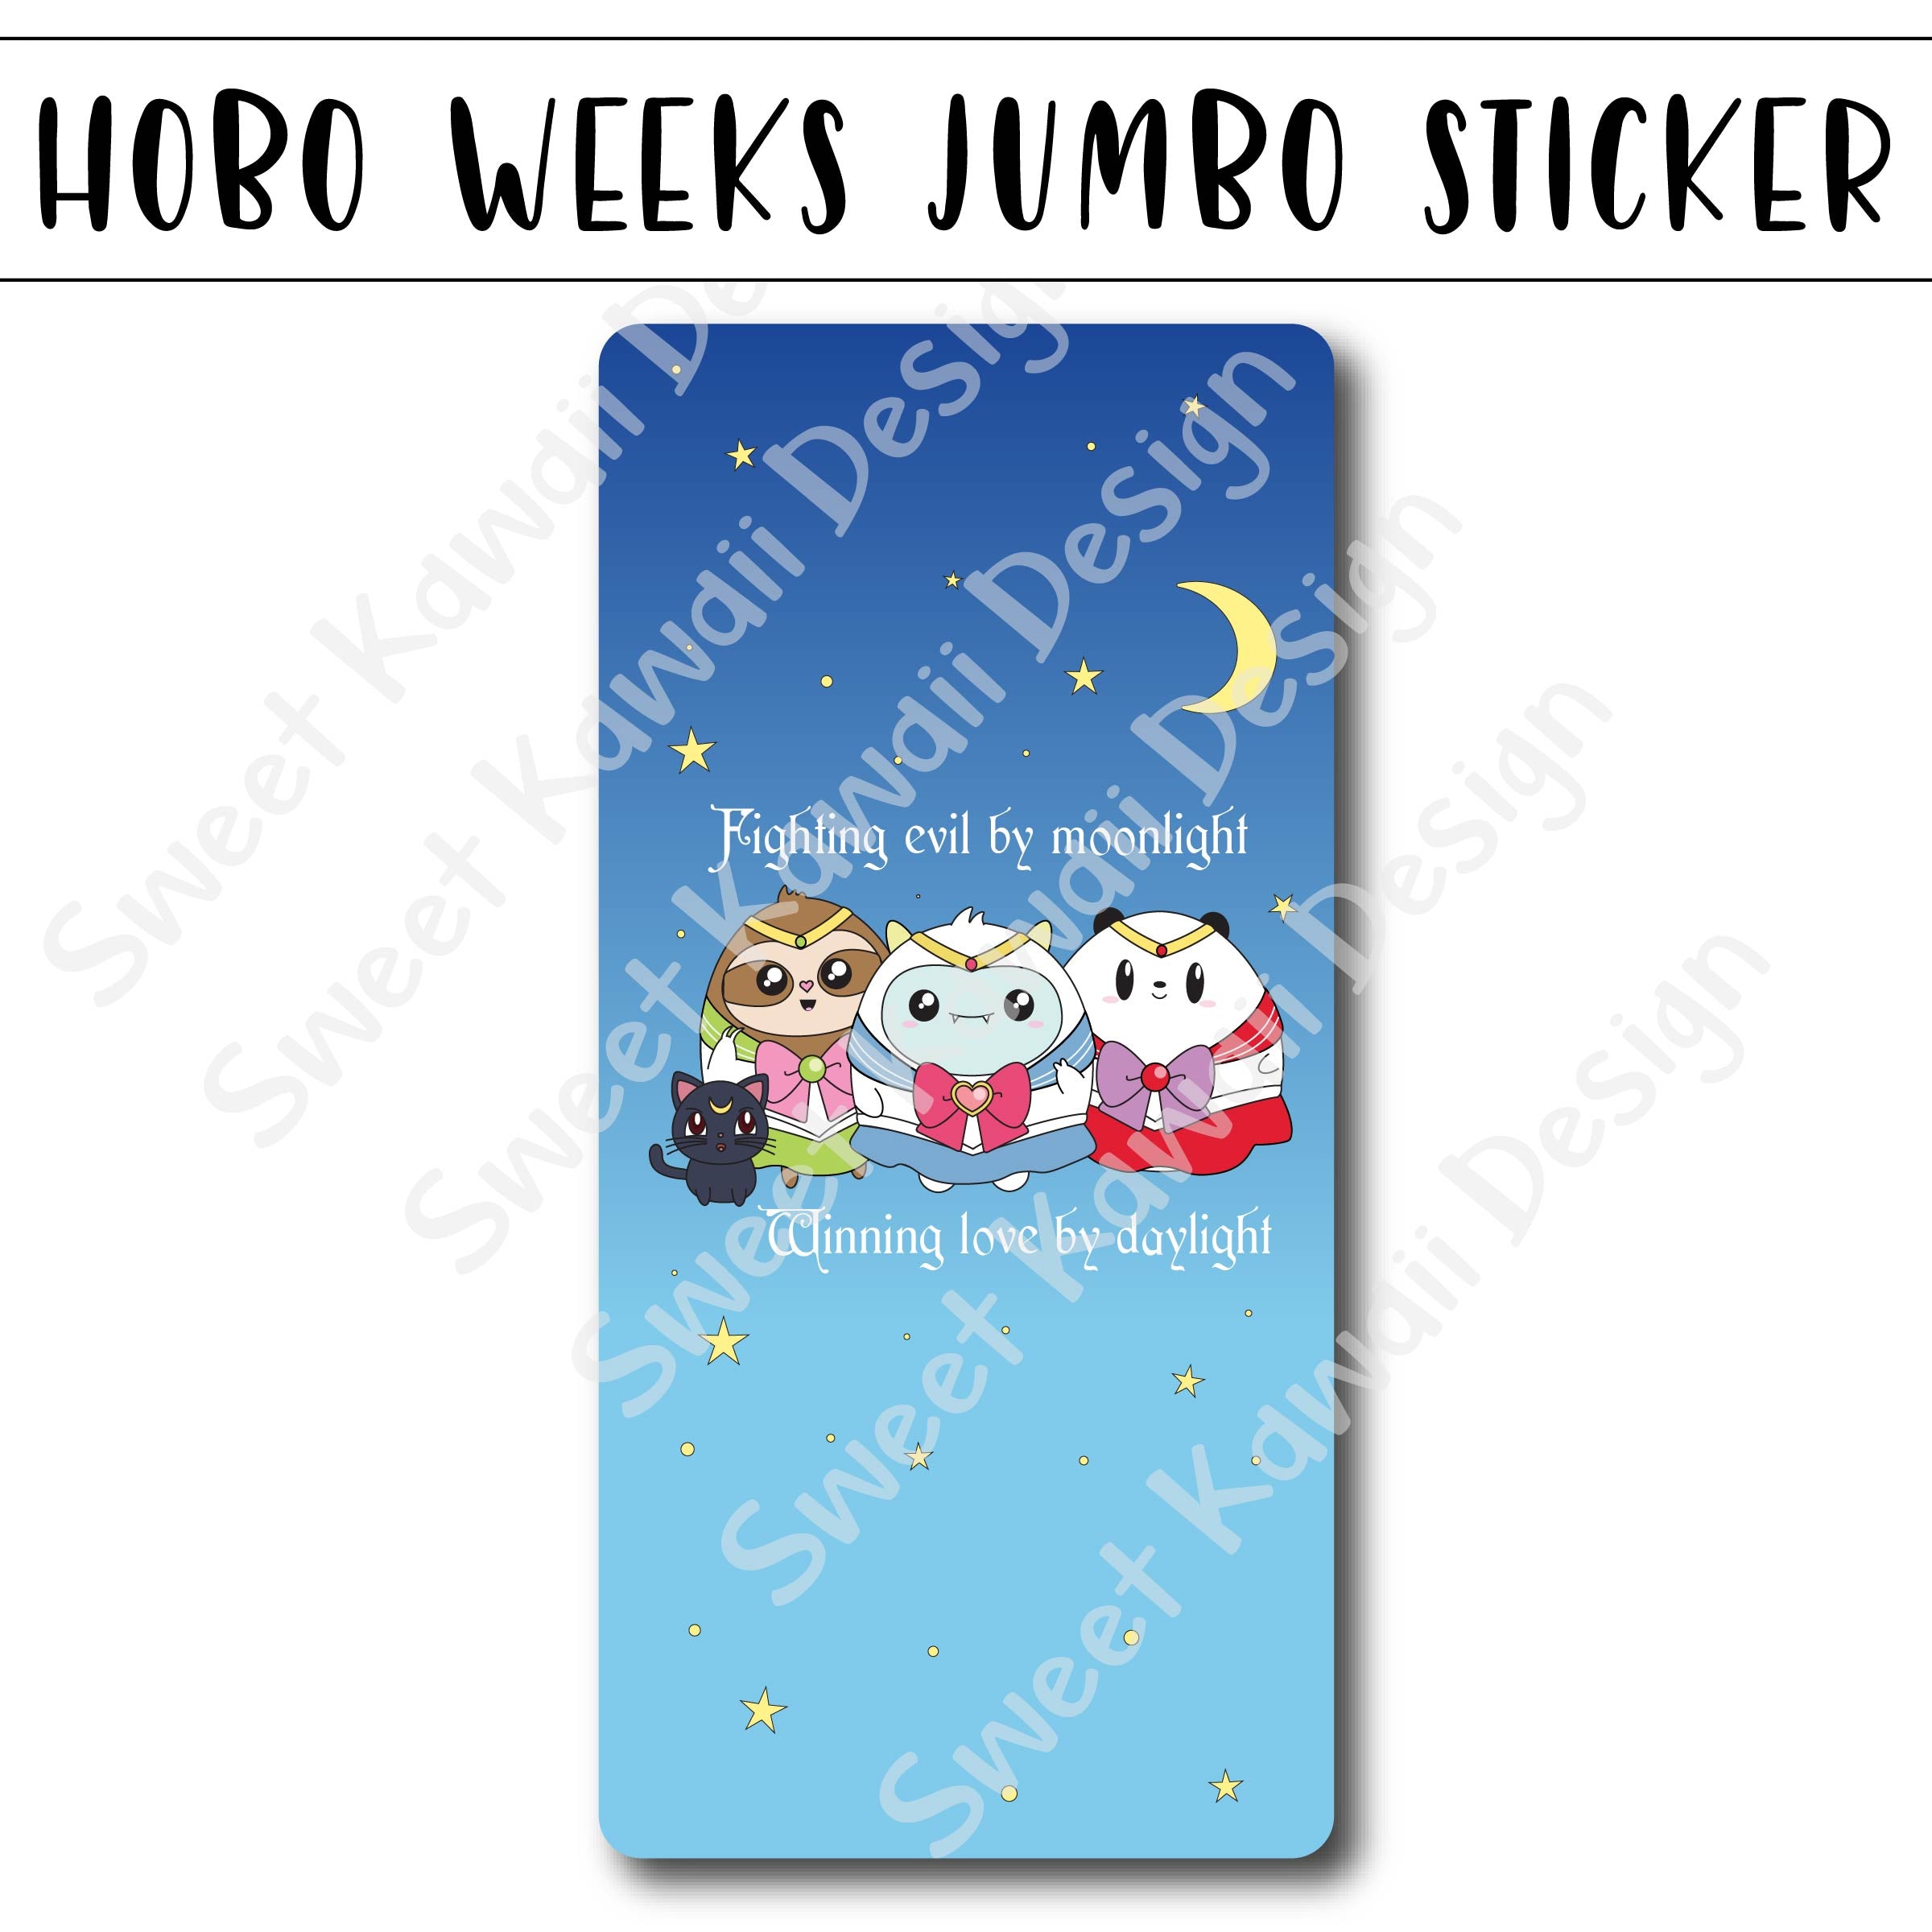 Kawaii Jumbo Sticker - Sailor Critters - Size Options Available